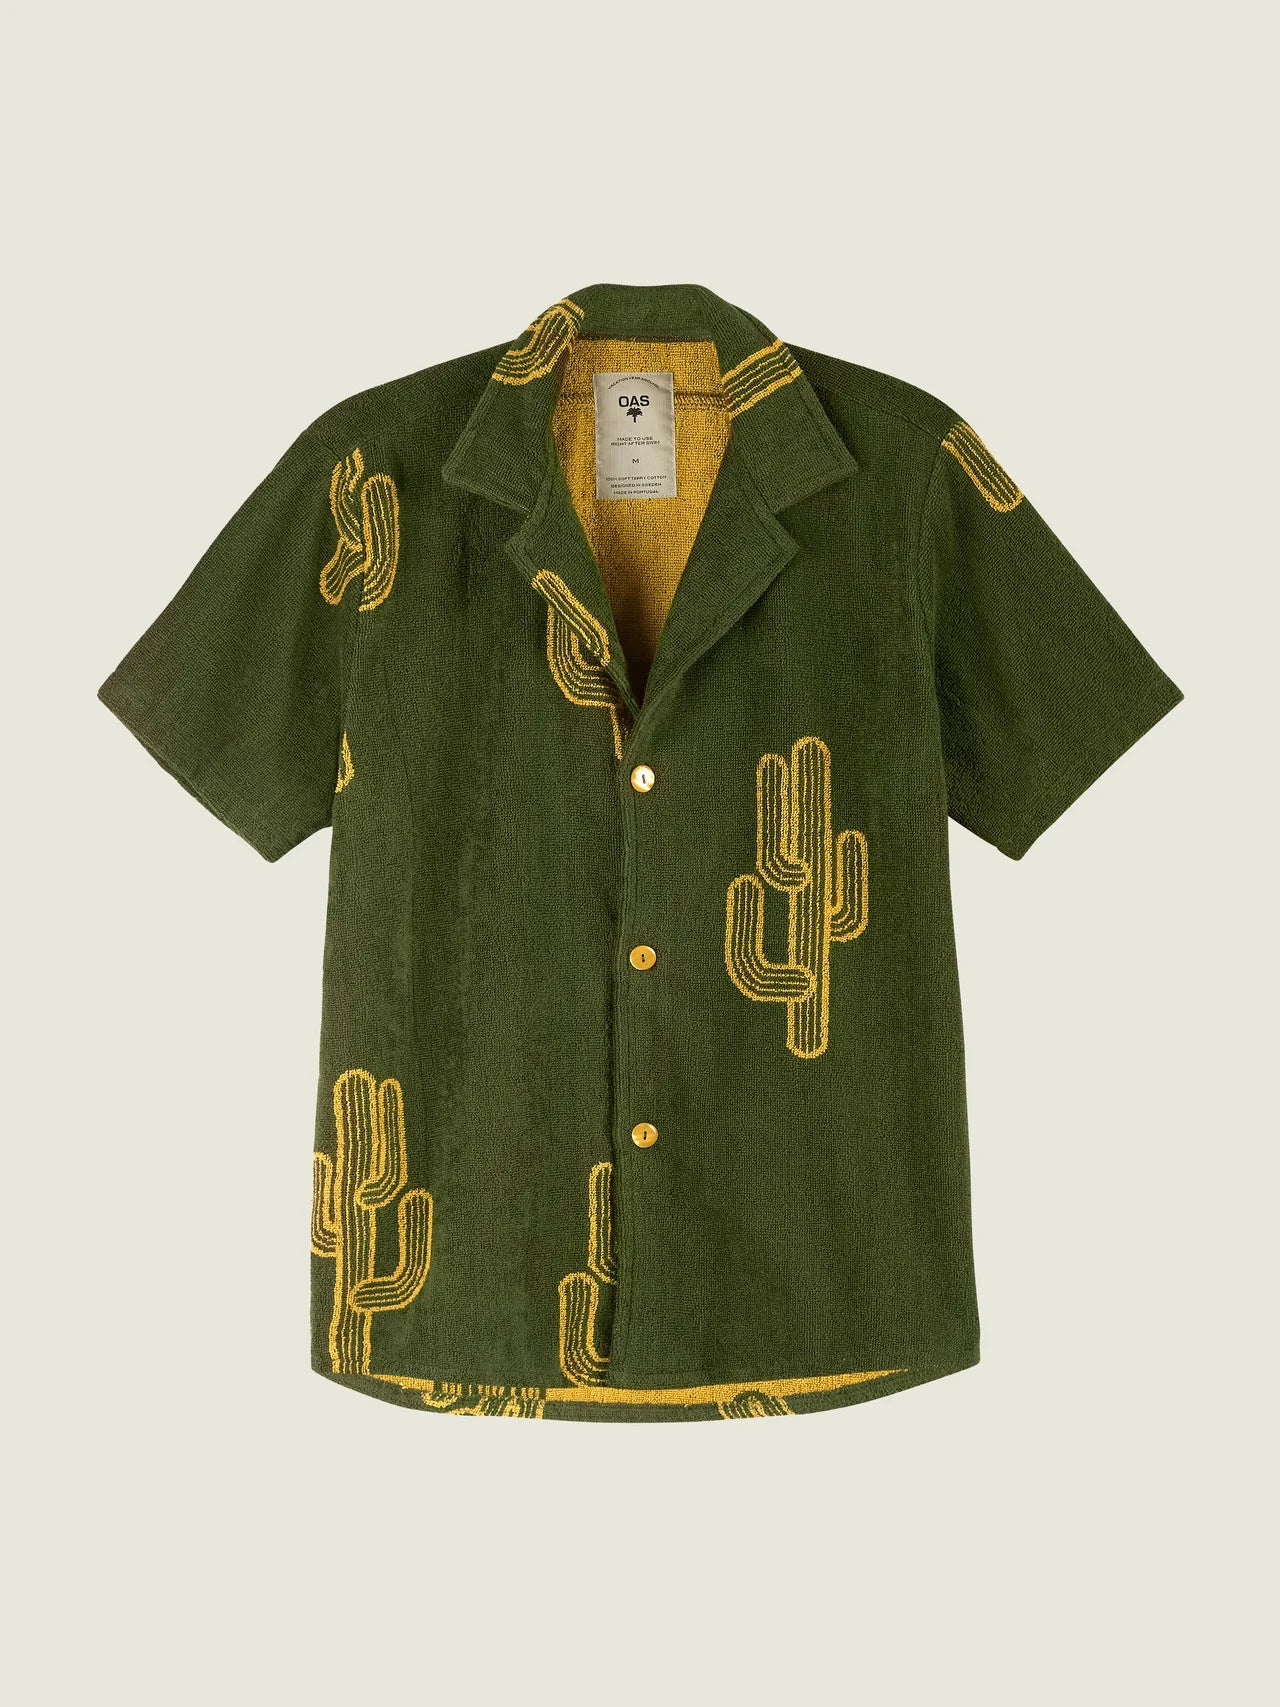 Cuba Terry Shirt - Mezcal Cactus OAS